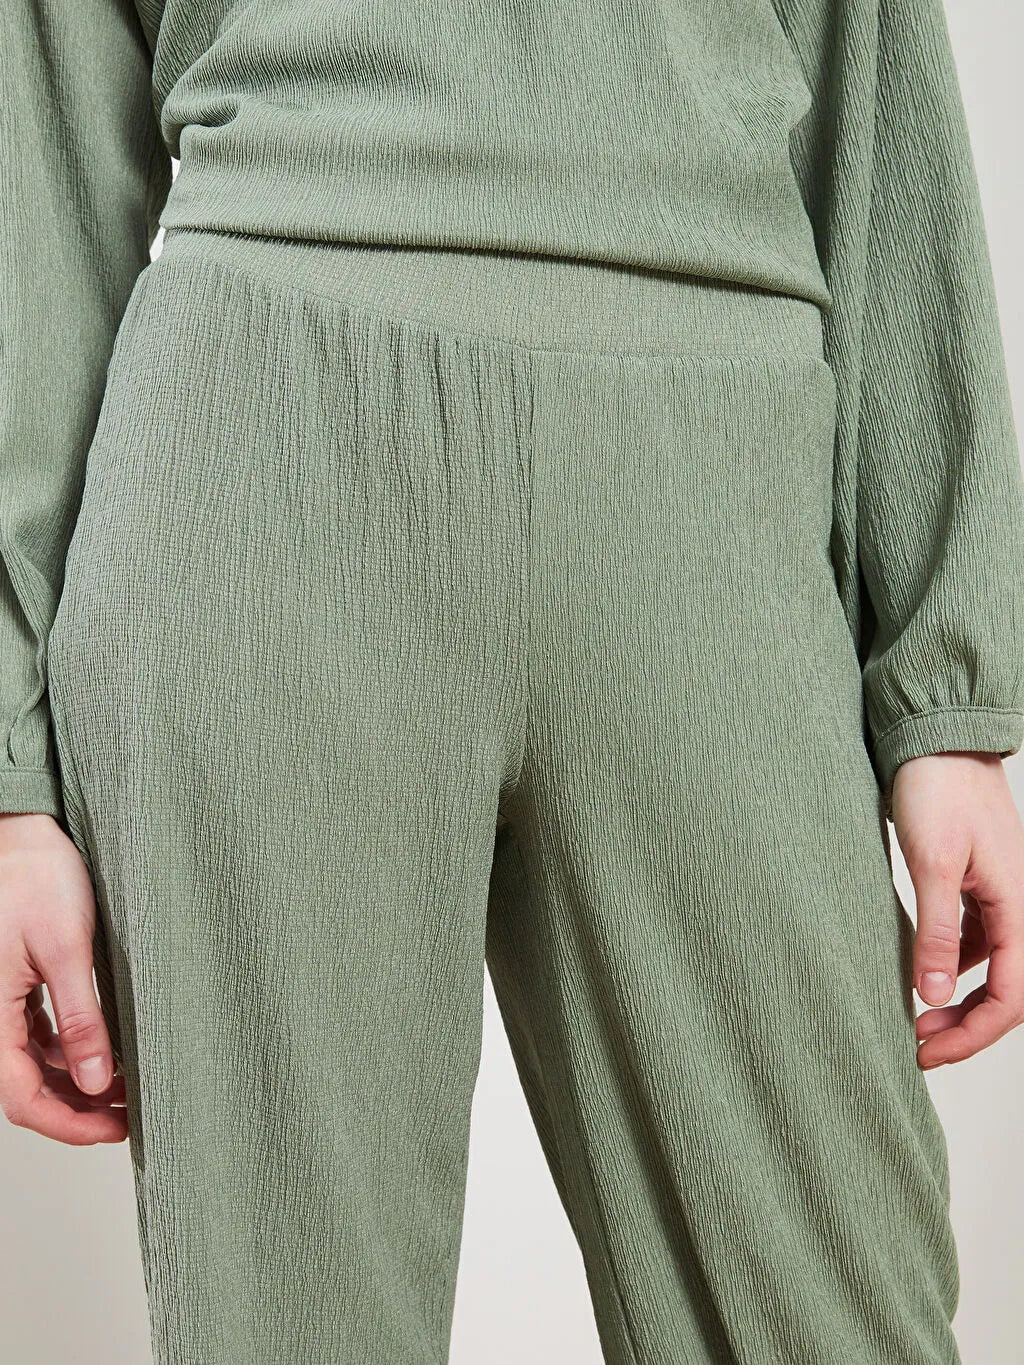 MODEST Elastic Waist Comfortable Pattern Plain Women's Sweatpants